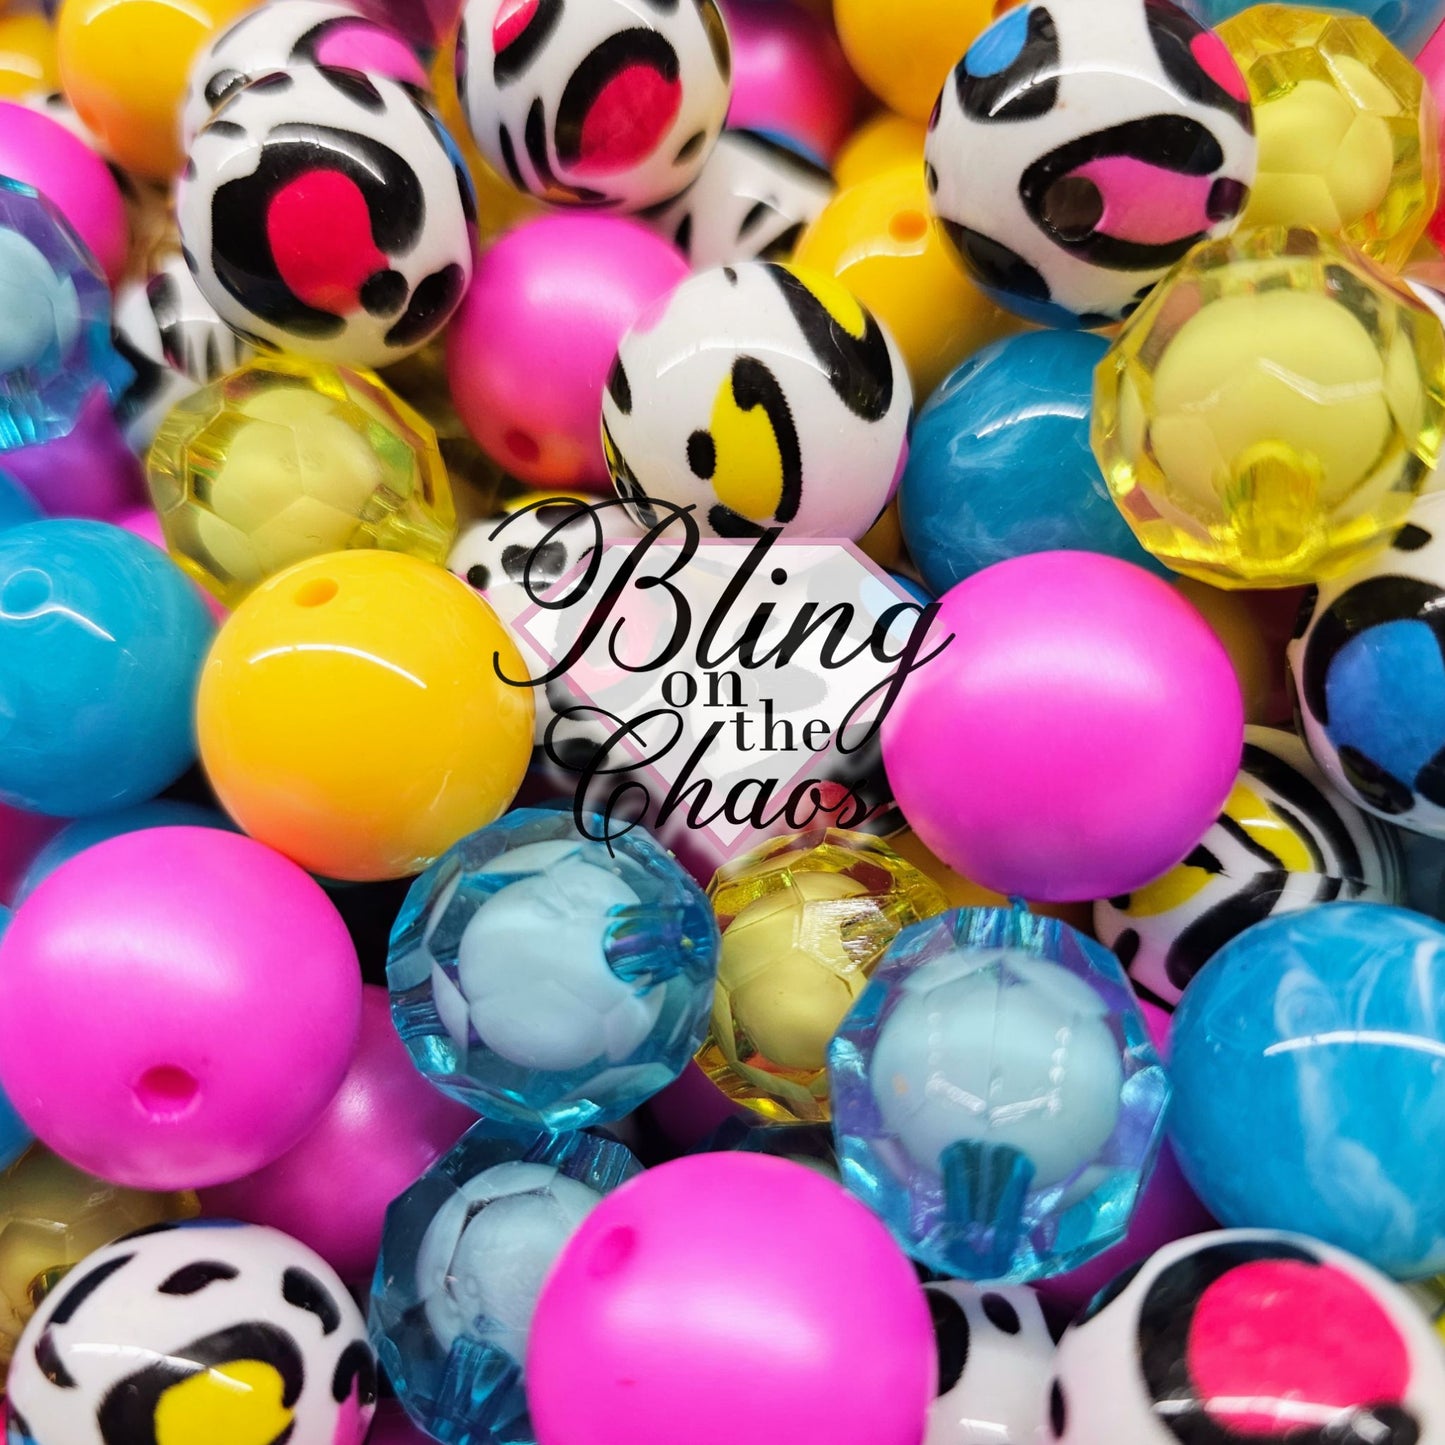 Neon Leopard Bubblegum 20mm-Bling on the Chaos